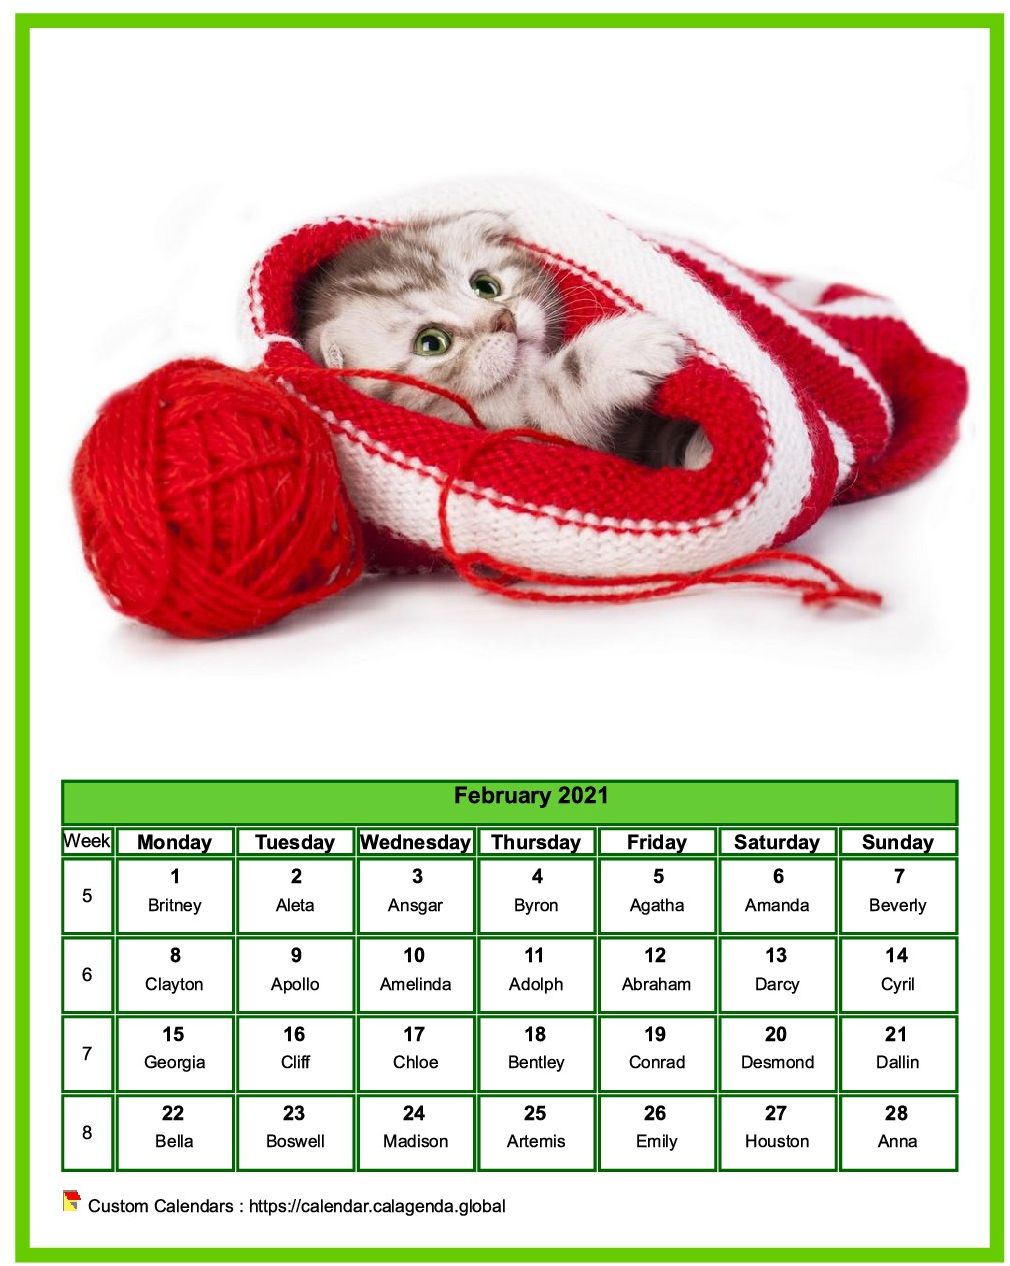 Calendar February 2021 cats